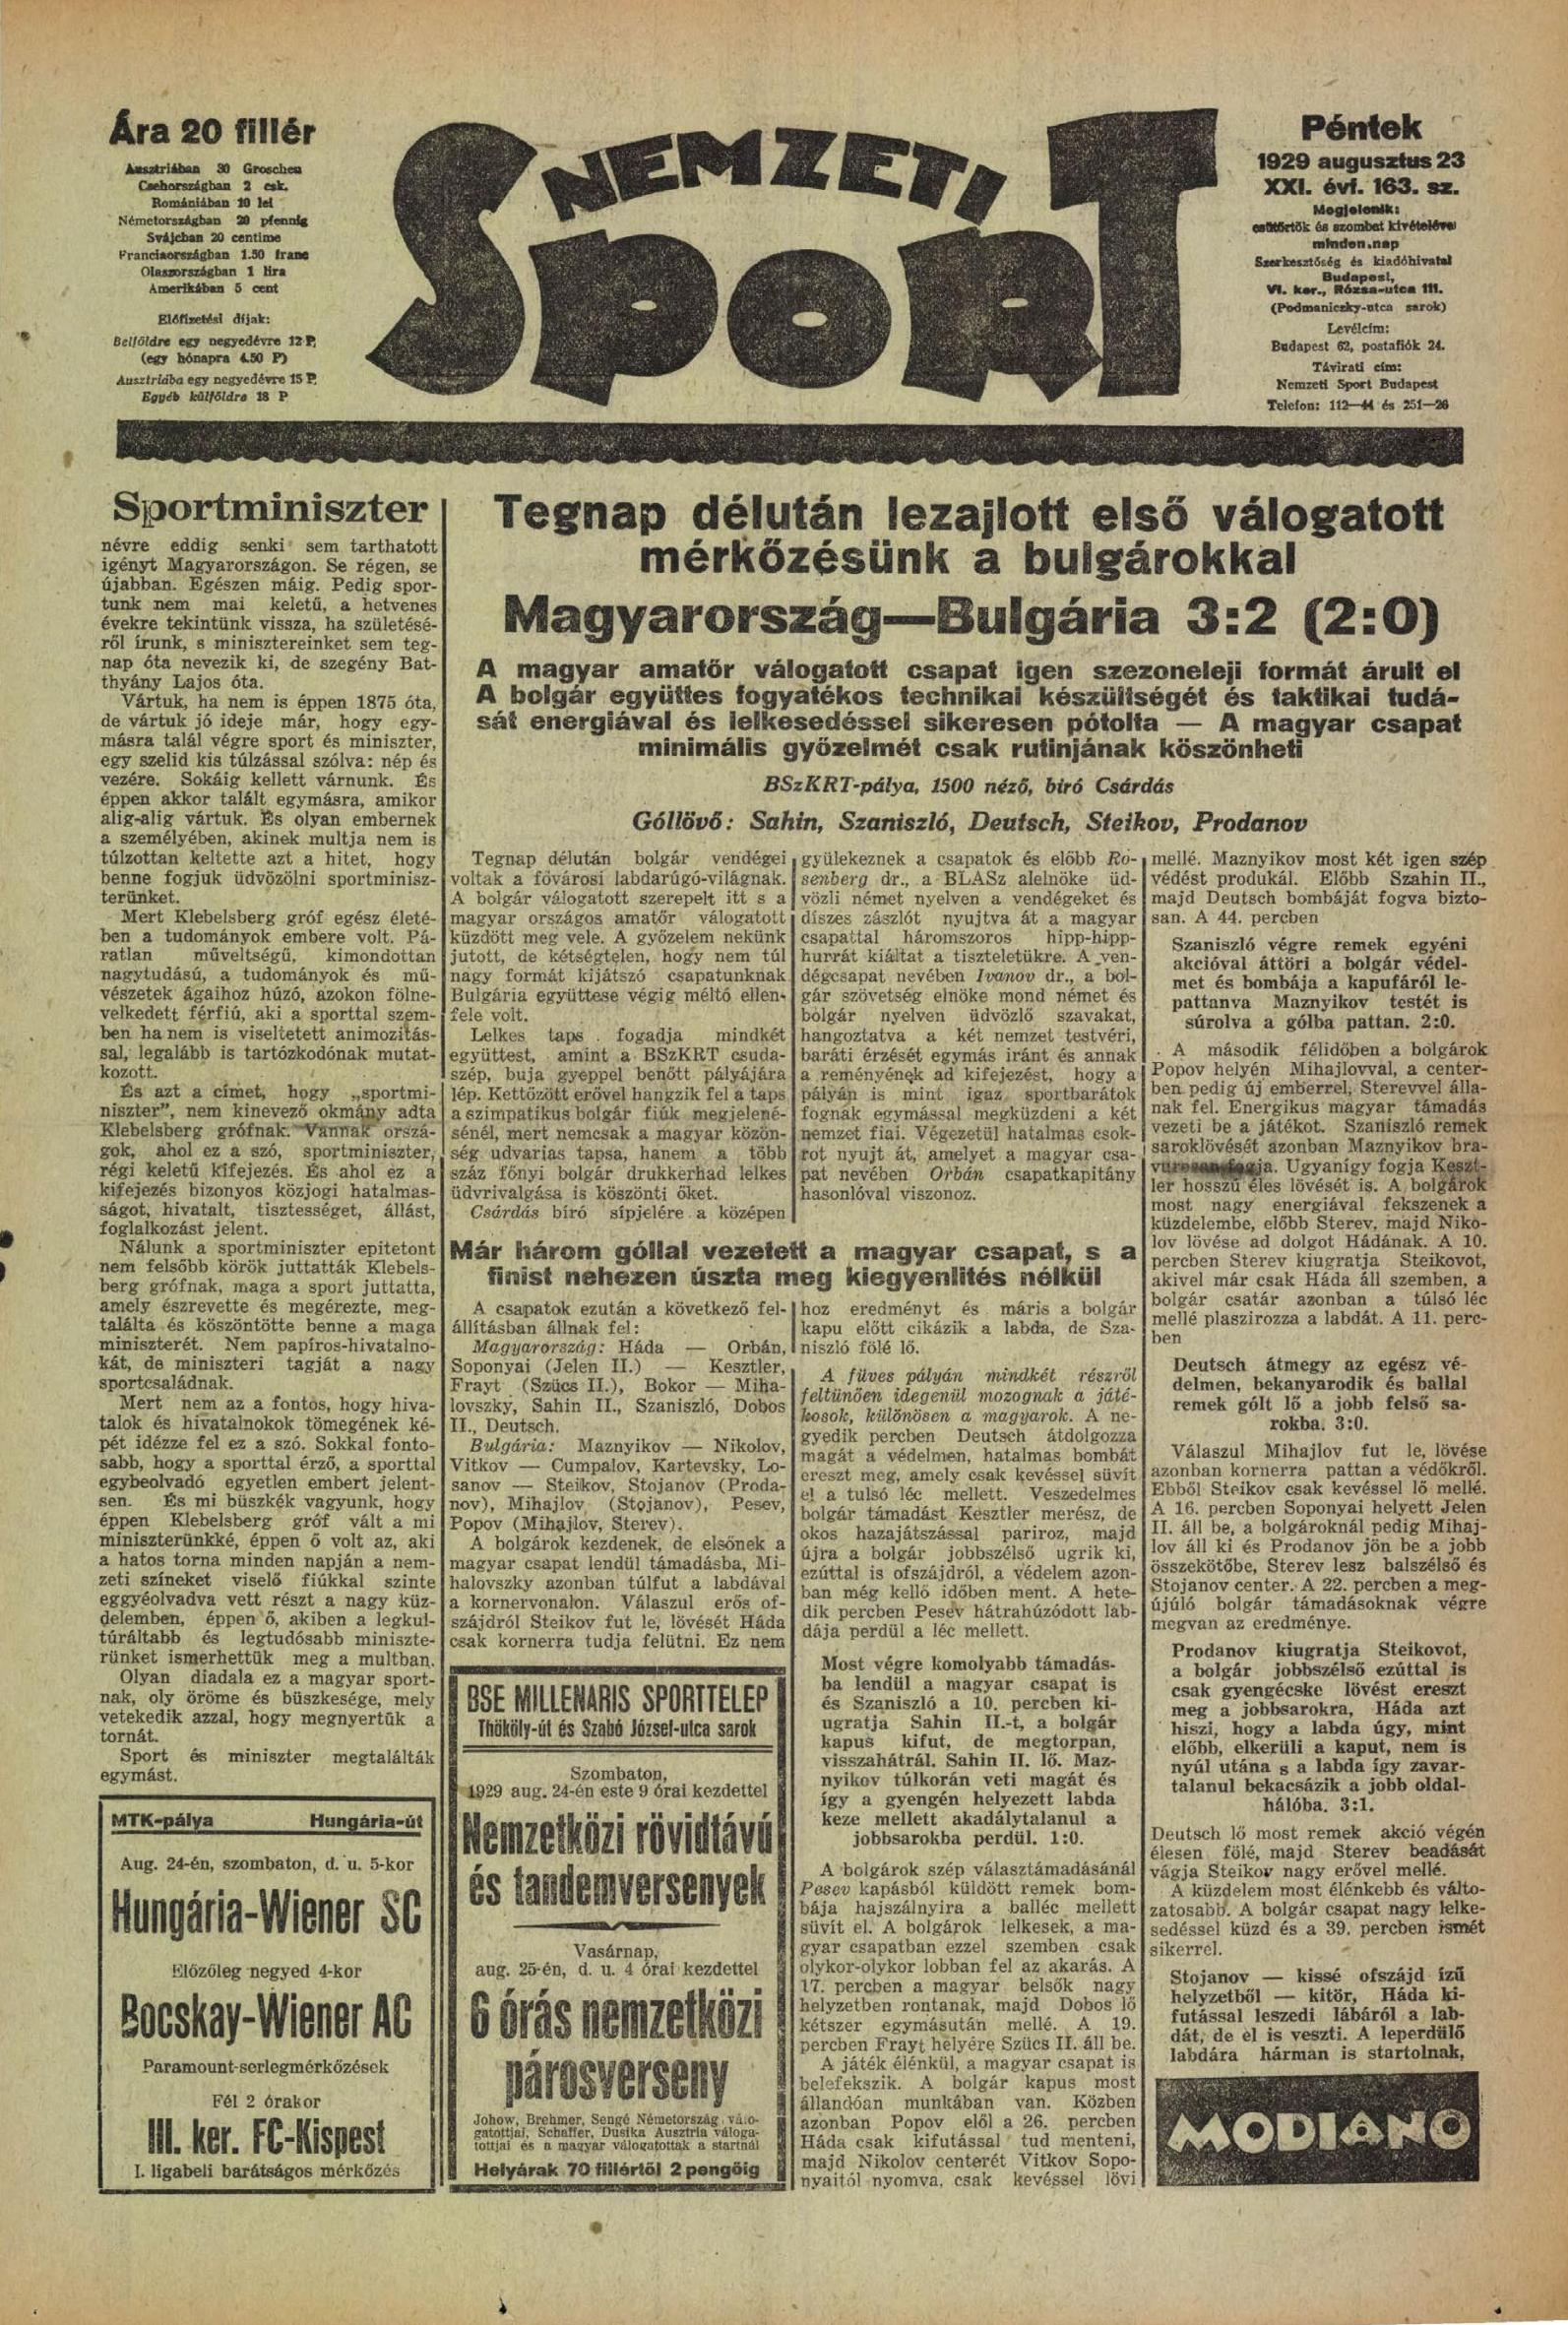 Sportminiszter. In. Nemzeti Sport, 21. 1929. augusztus 23. 1.